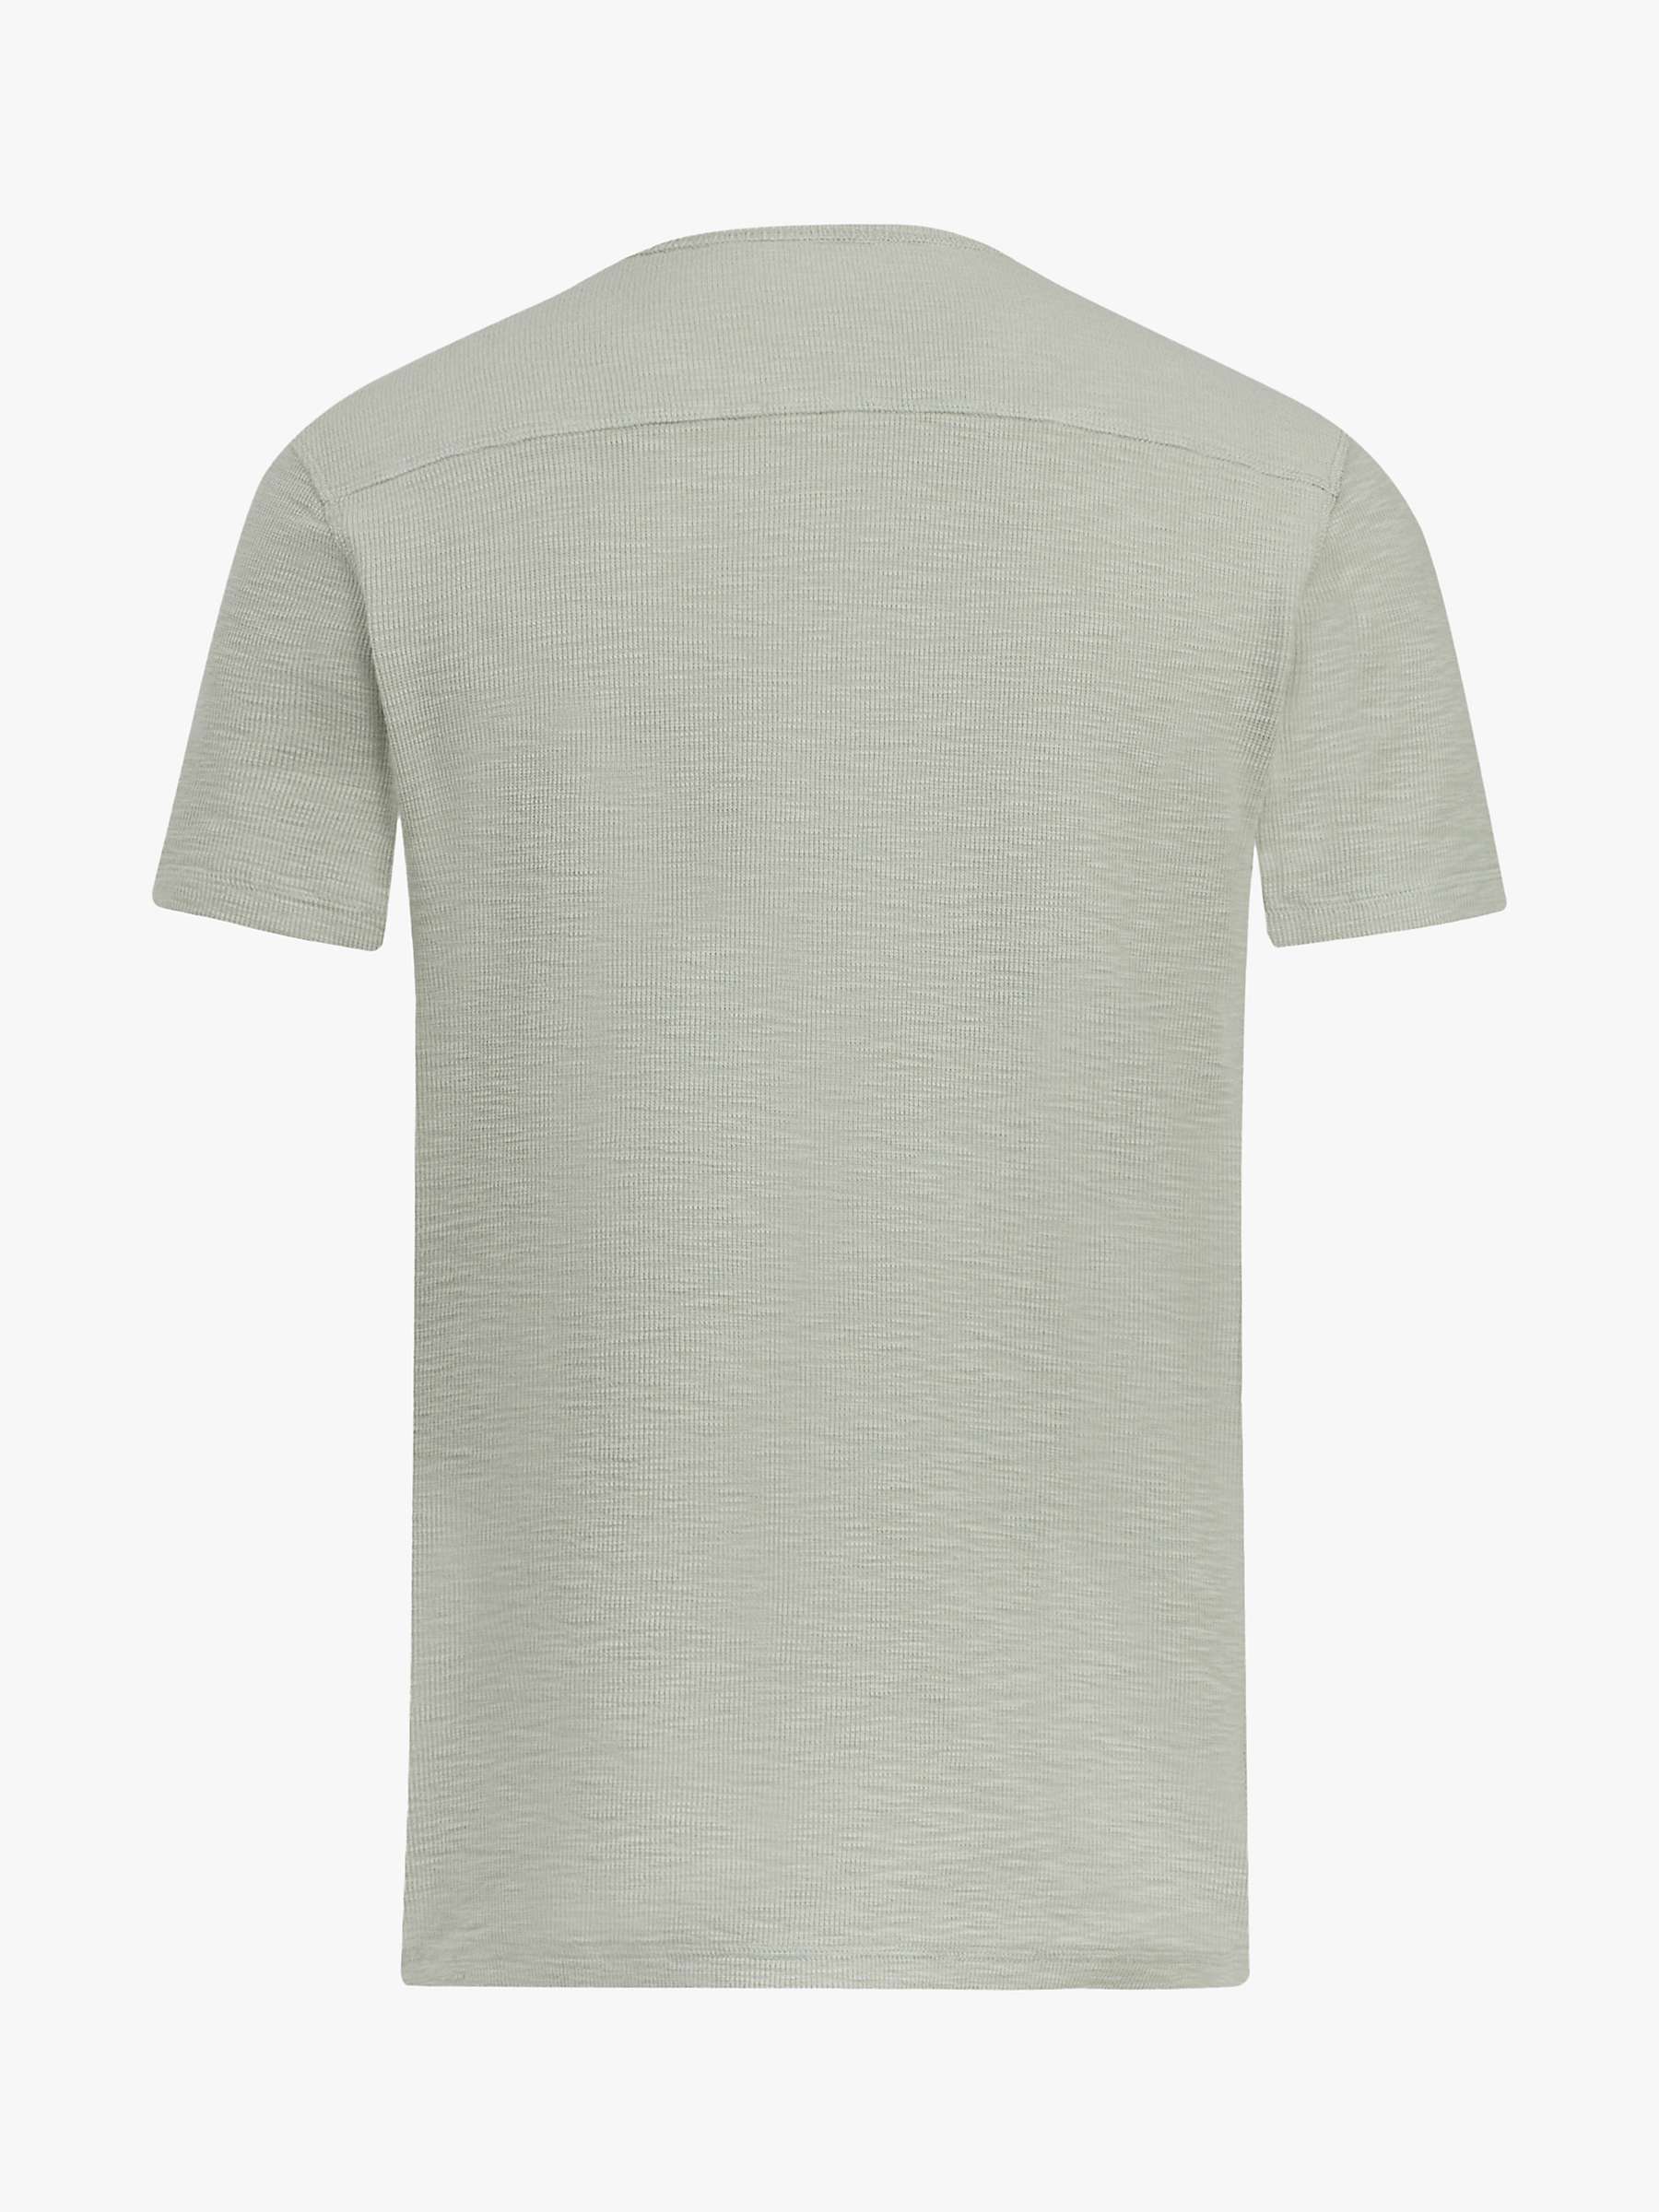 Buy AllSaints Muse Crew Neck T-Shirt Online at johnlewis.com